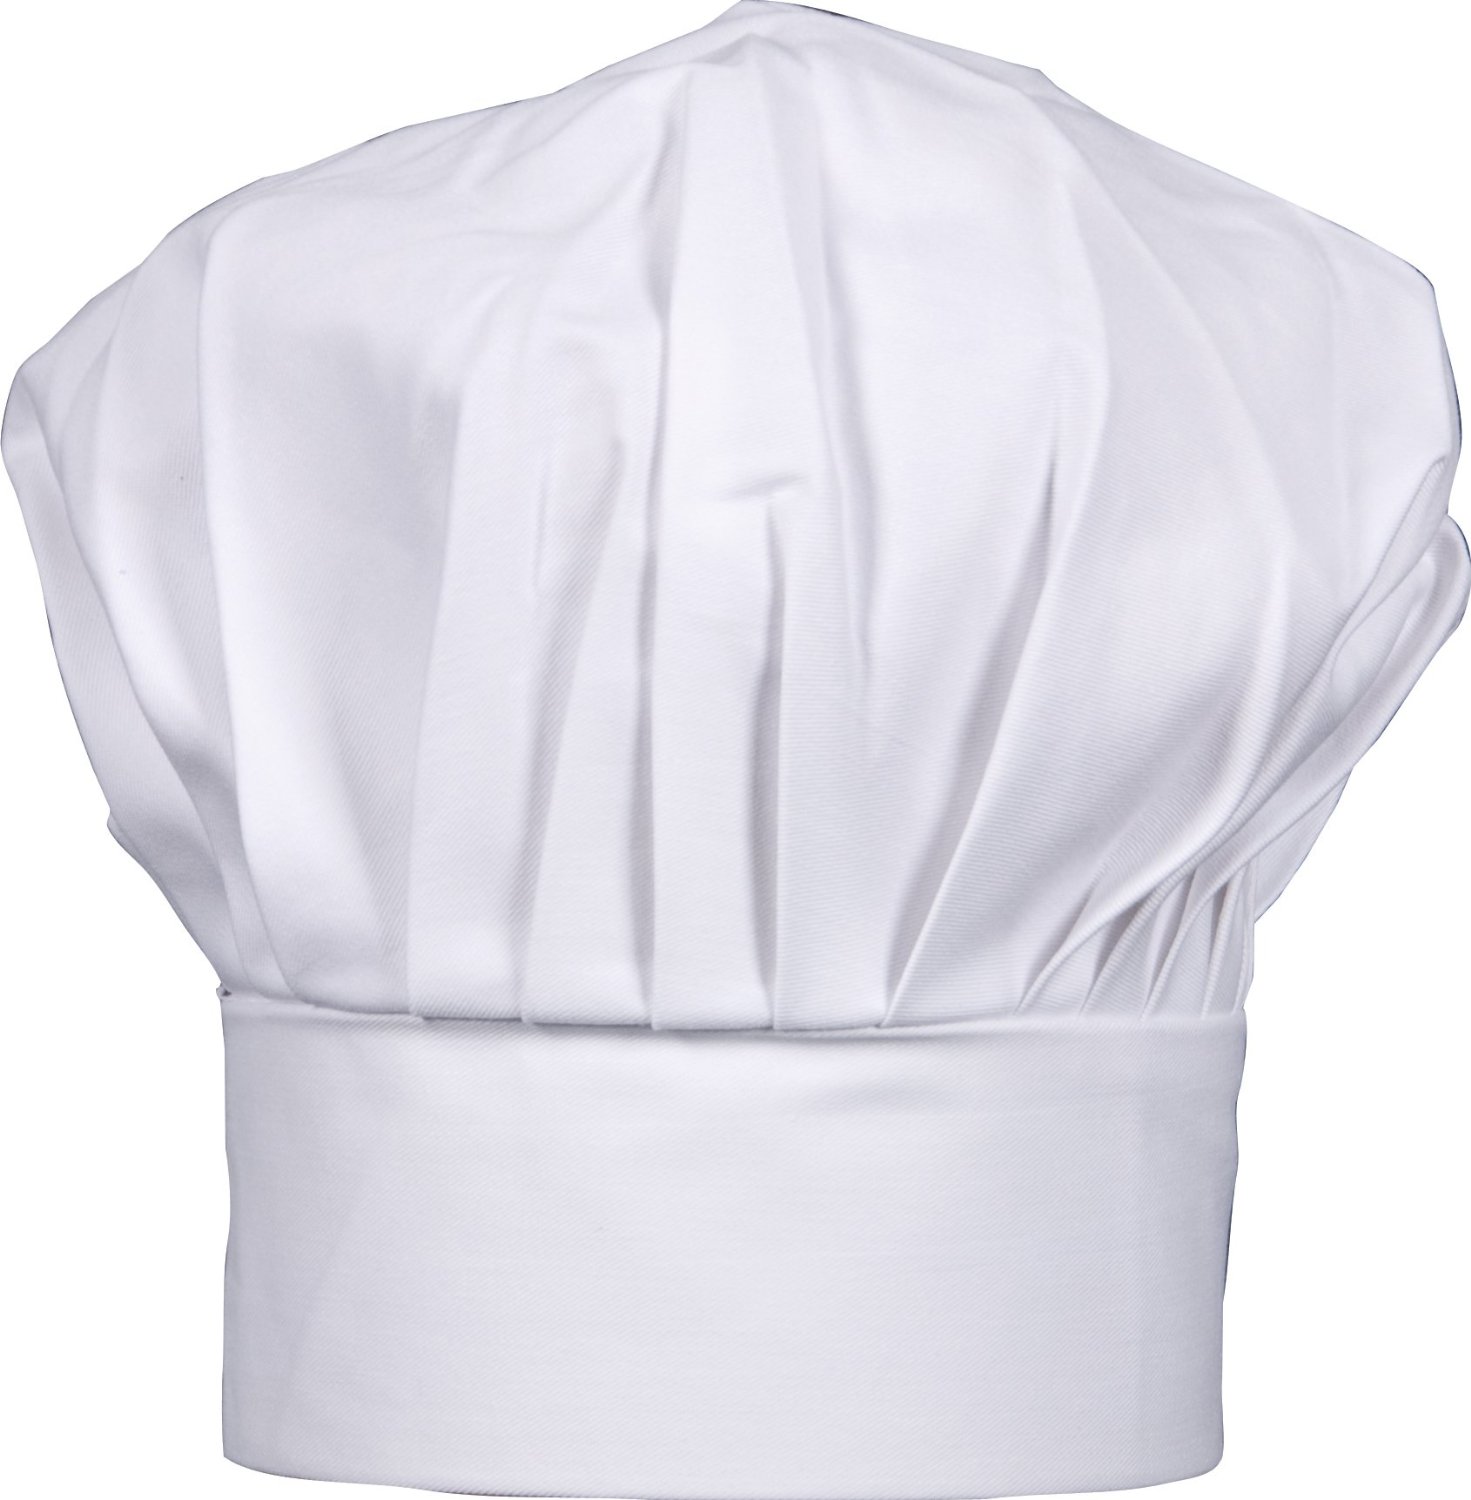 Amazon.com - HIC Adult Size Adjustable Chef Hat - Kitchen Linens